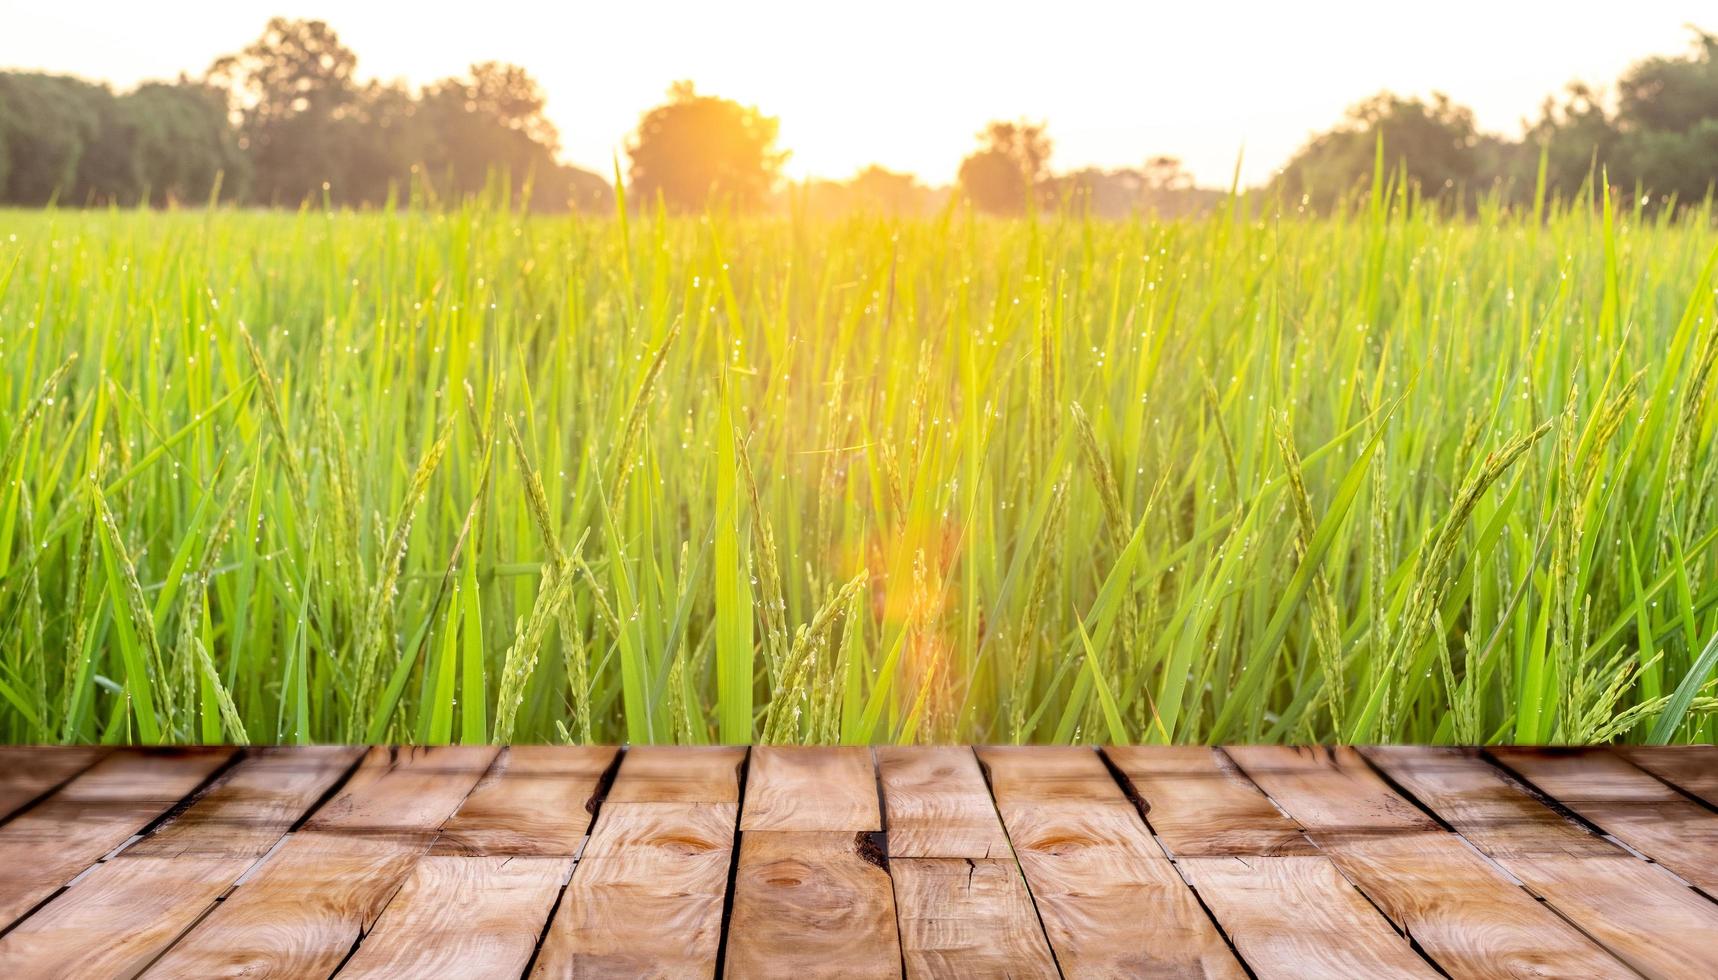 mooi houten verdieping en groen rijst- veld- natuur achtergrond, landbouw Product staand vitrine achtergrond foto